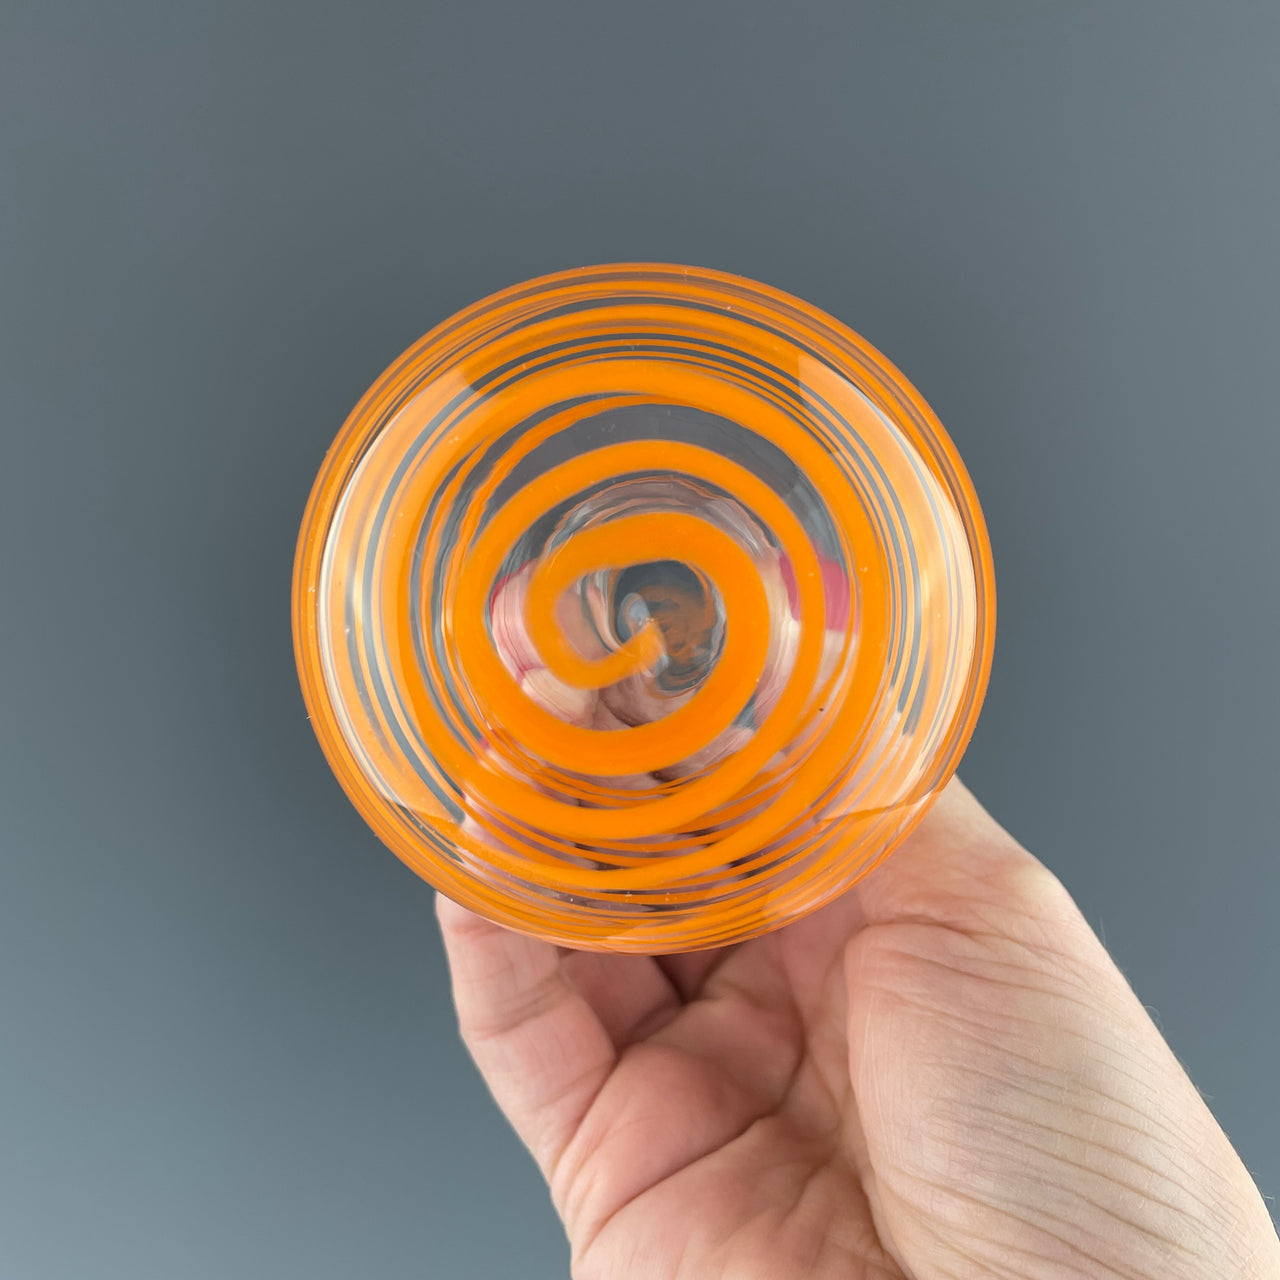 bottom of a glass vase with orange swirls